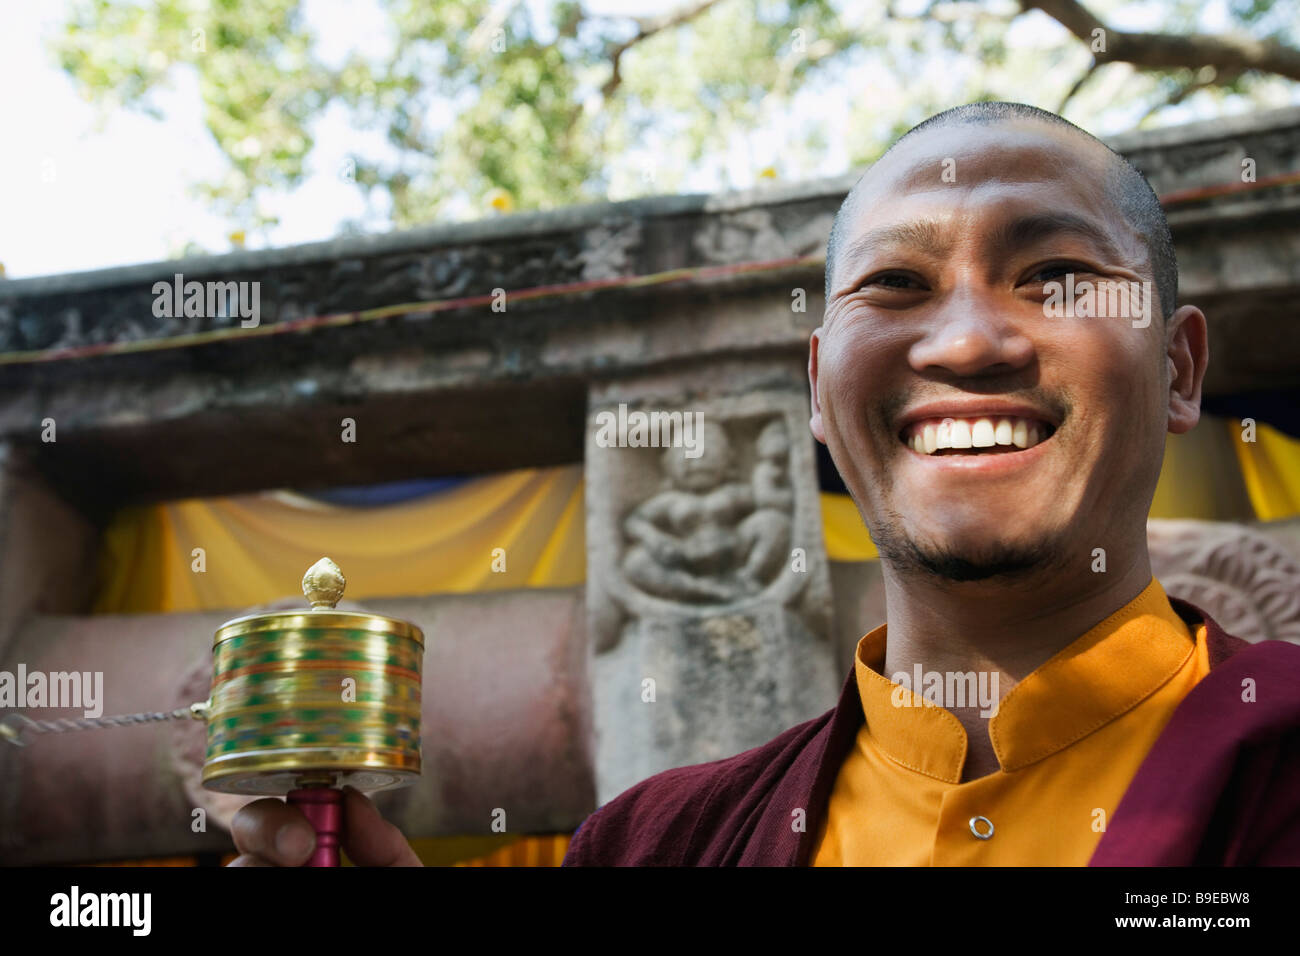 Monk holding a prayer wheel and smiling, Mahabodhi Temple, Bodhgaya, Gaya, Bihar, India Stock Photo